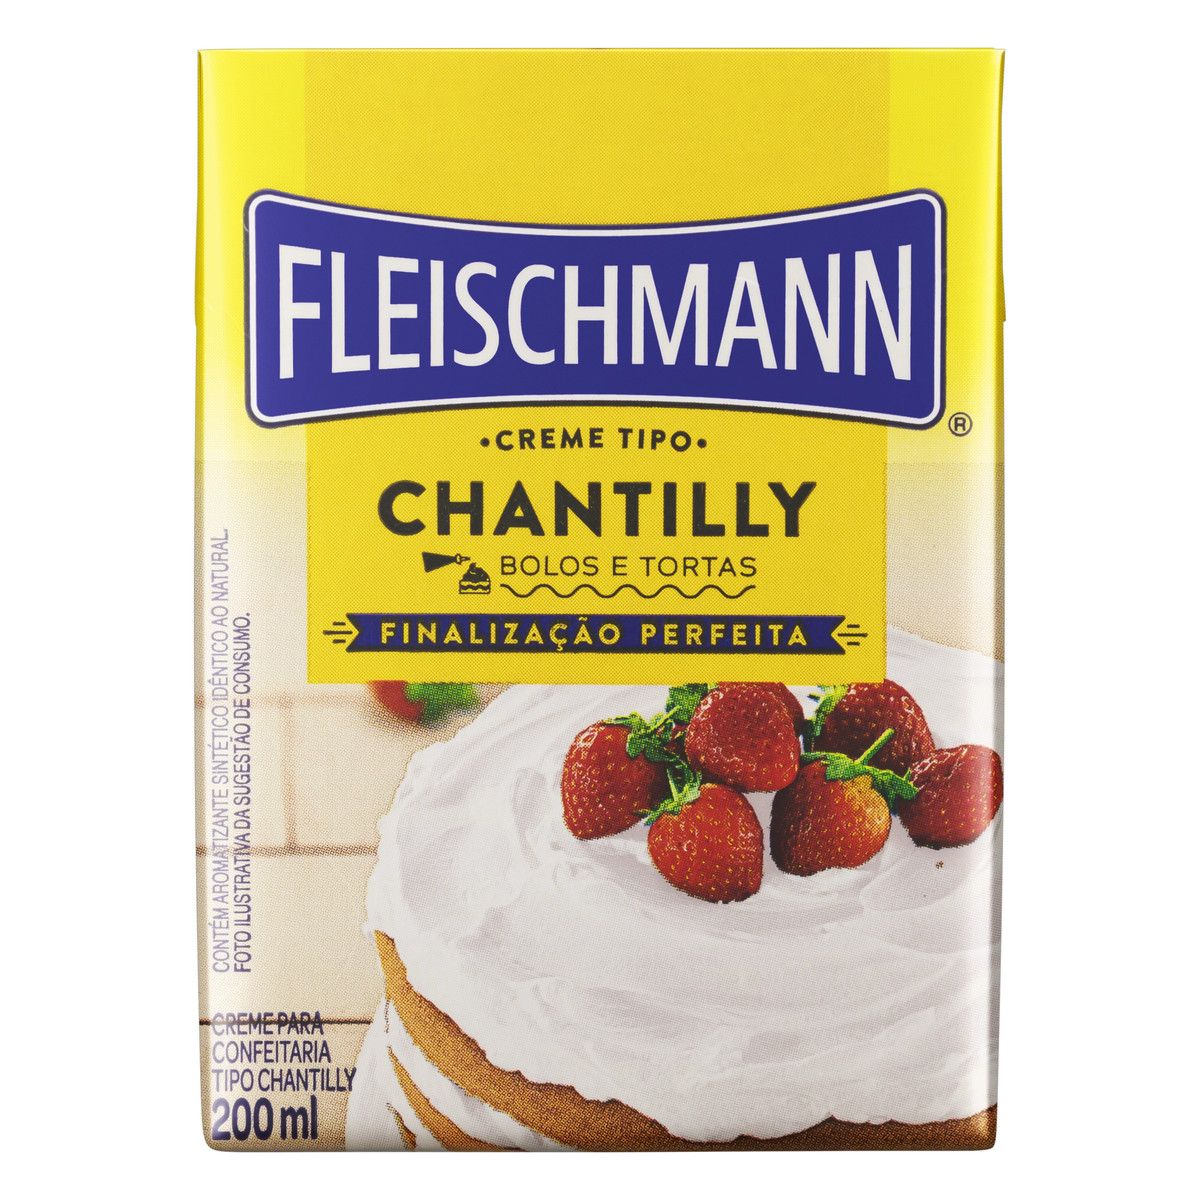 Creme Chantilly Fleischmann Caixa 200ml image number 0